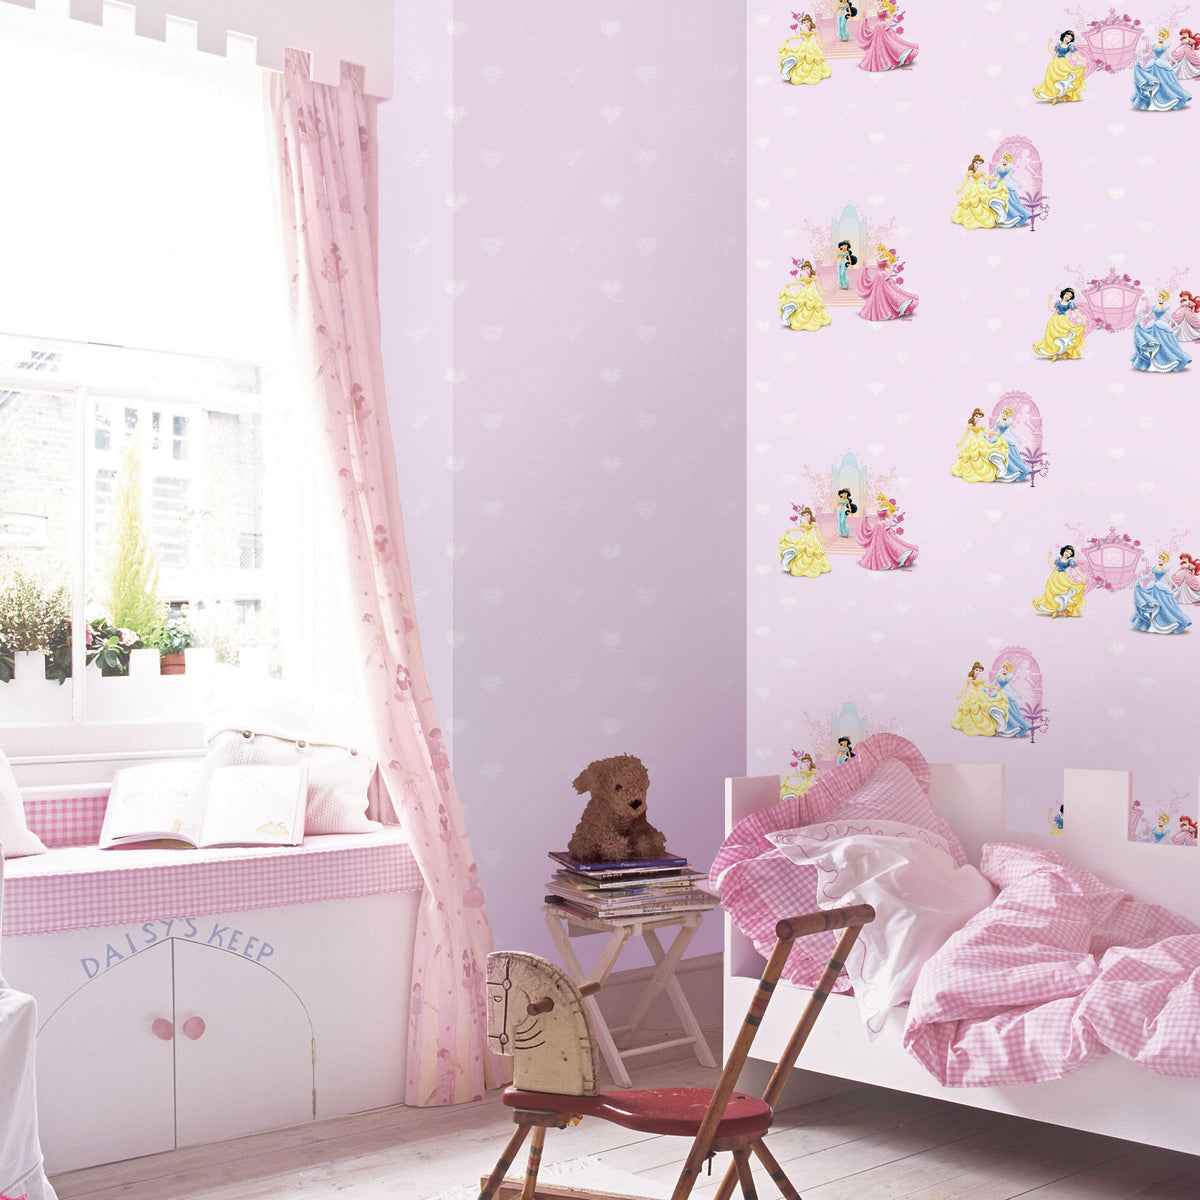 Disney Princess Gathering Wallpaper - Kids Haven